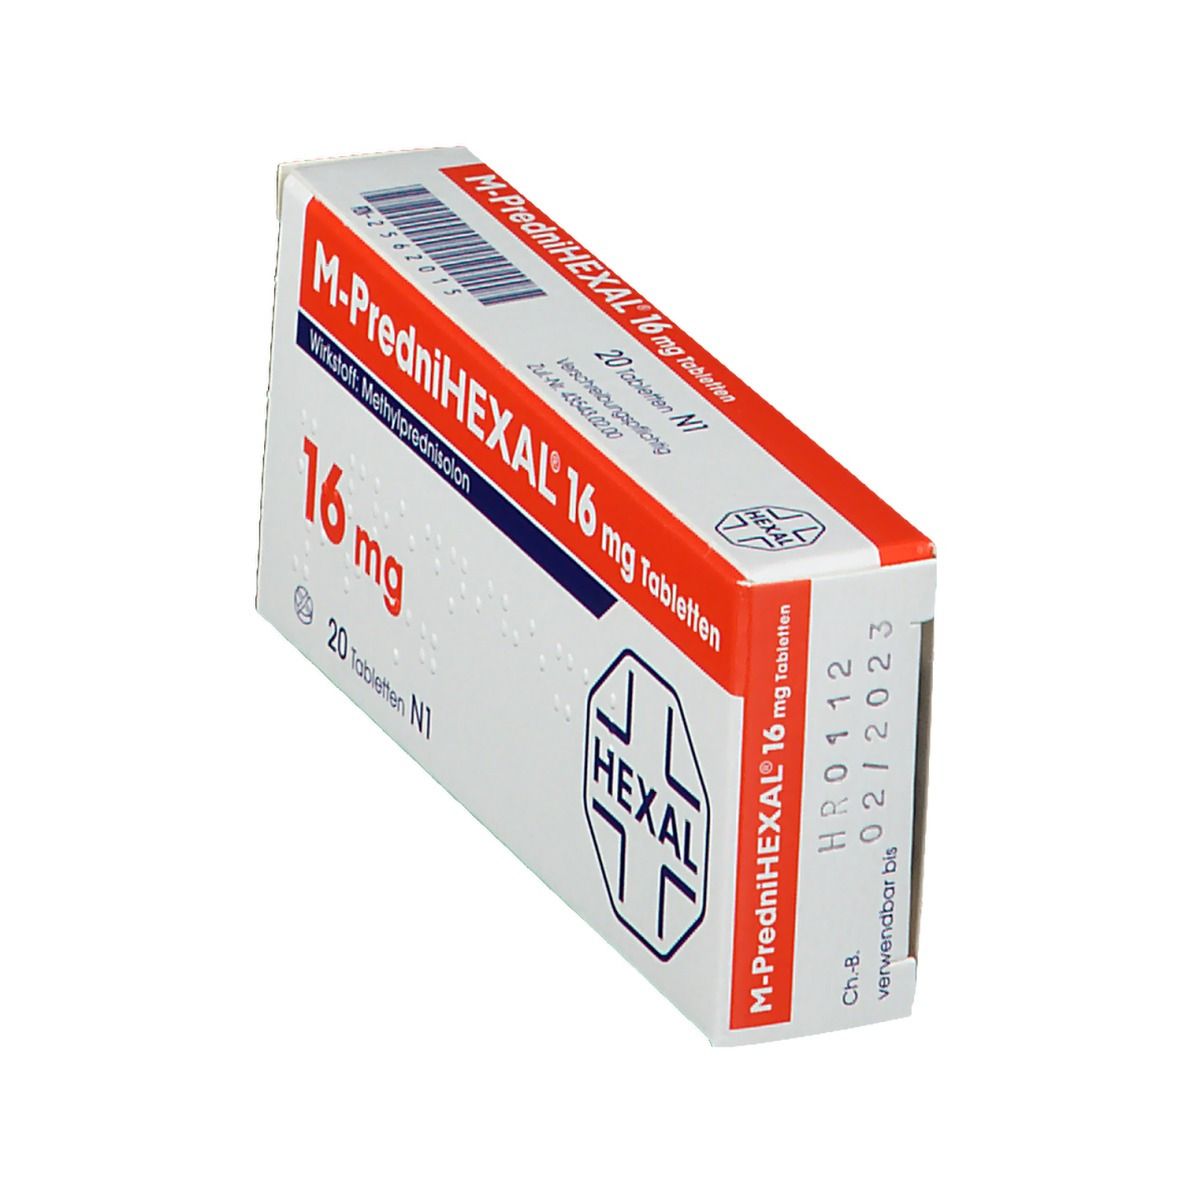 M-PredniHEXAL® 16 mg